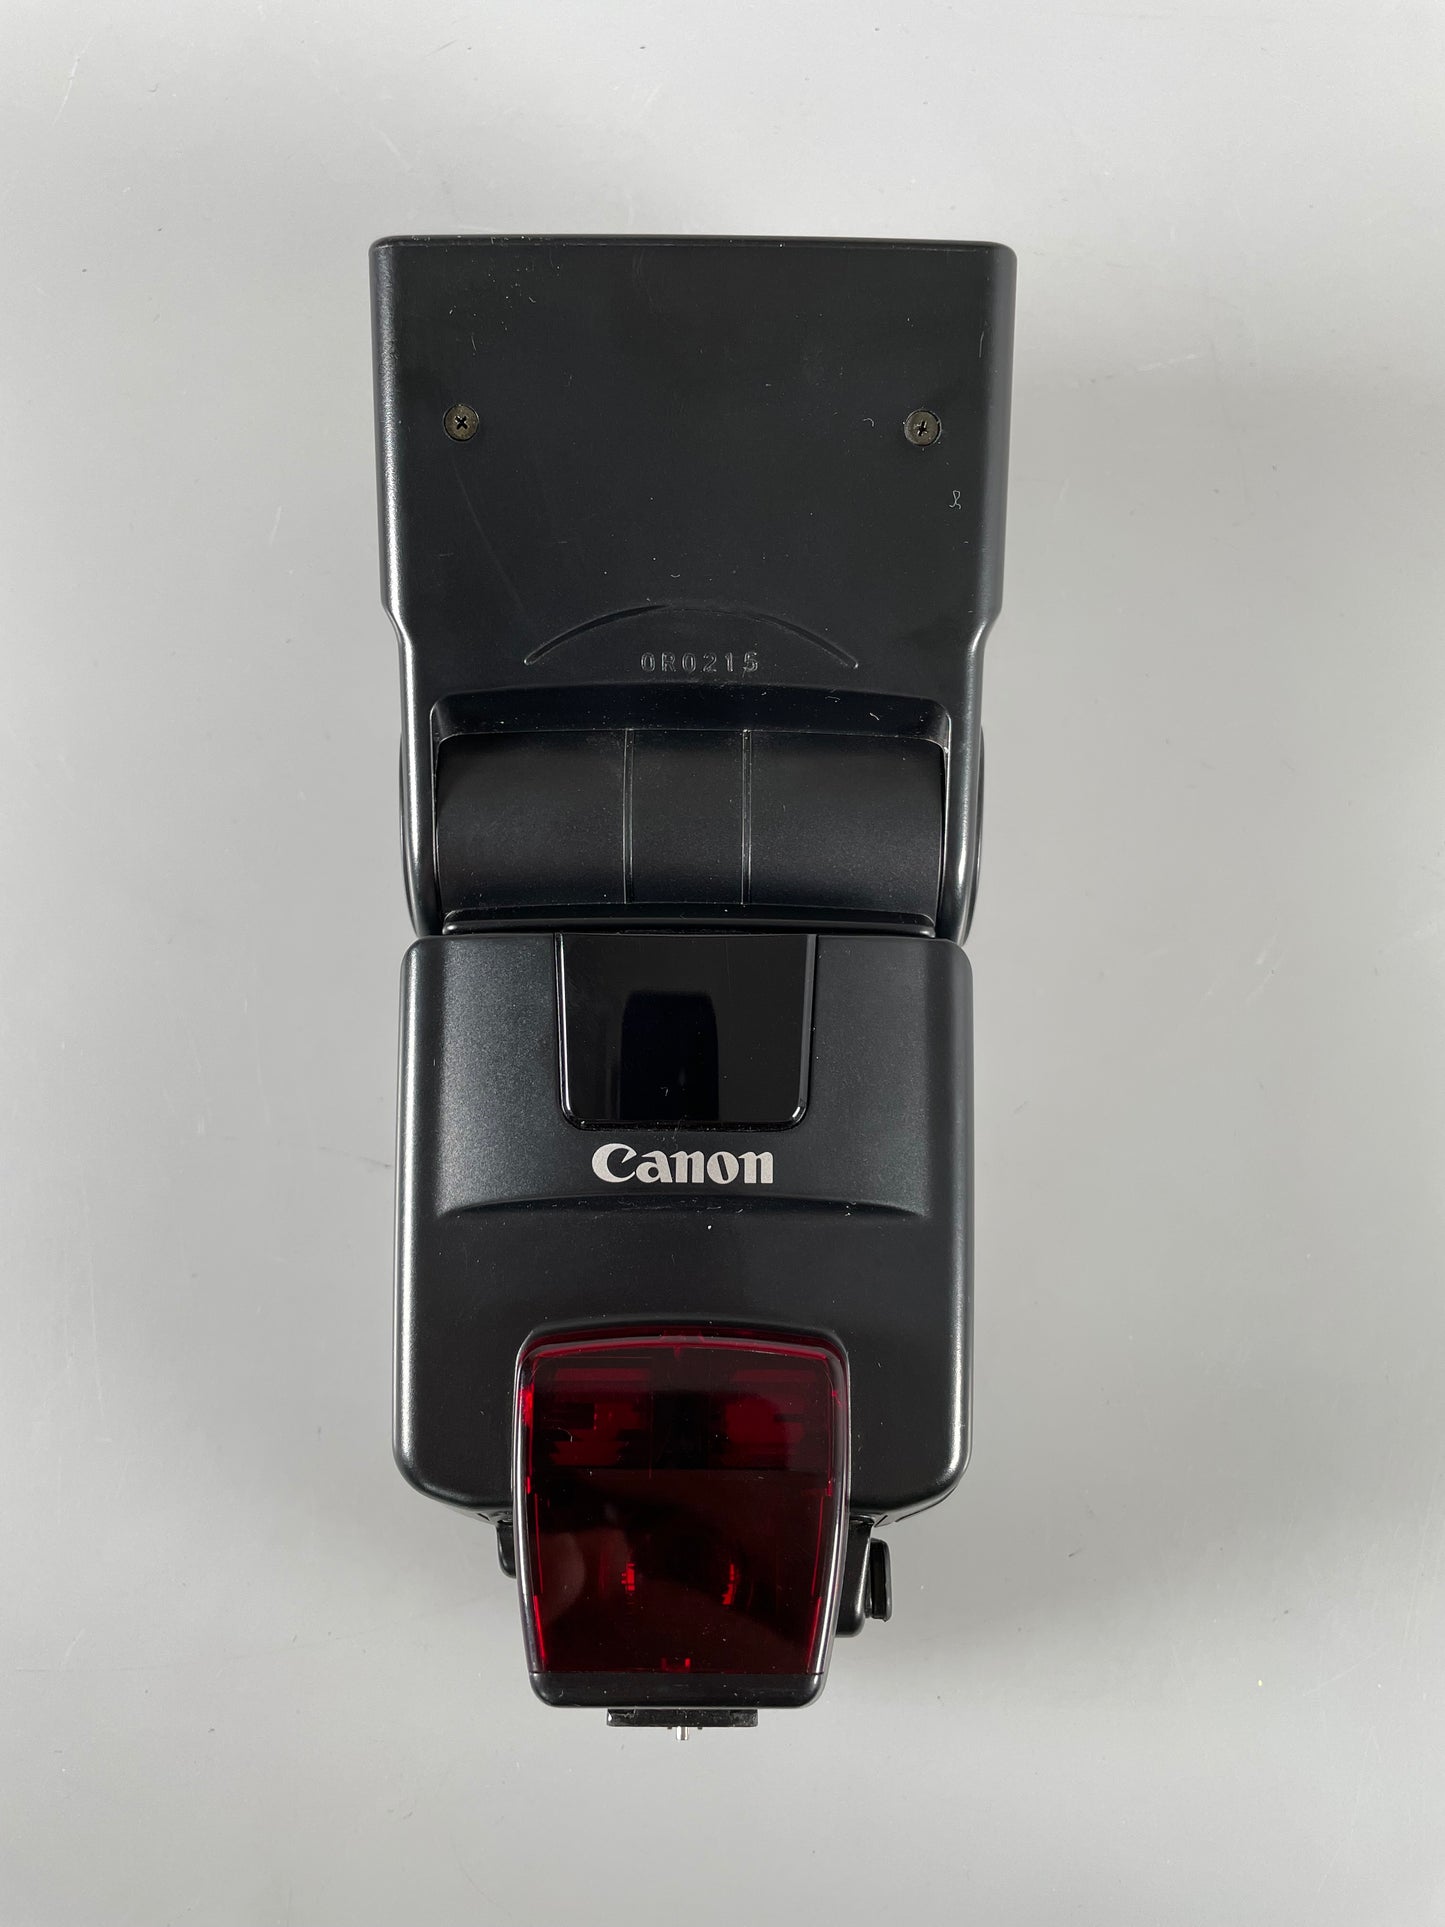 Canon Speedlite 550EX Shoe Mount Flash